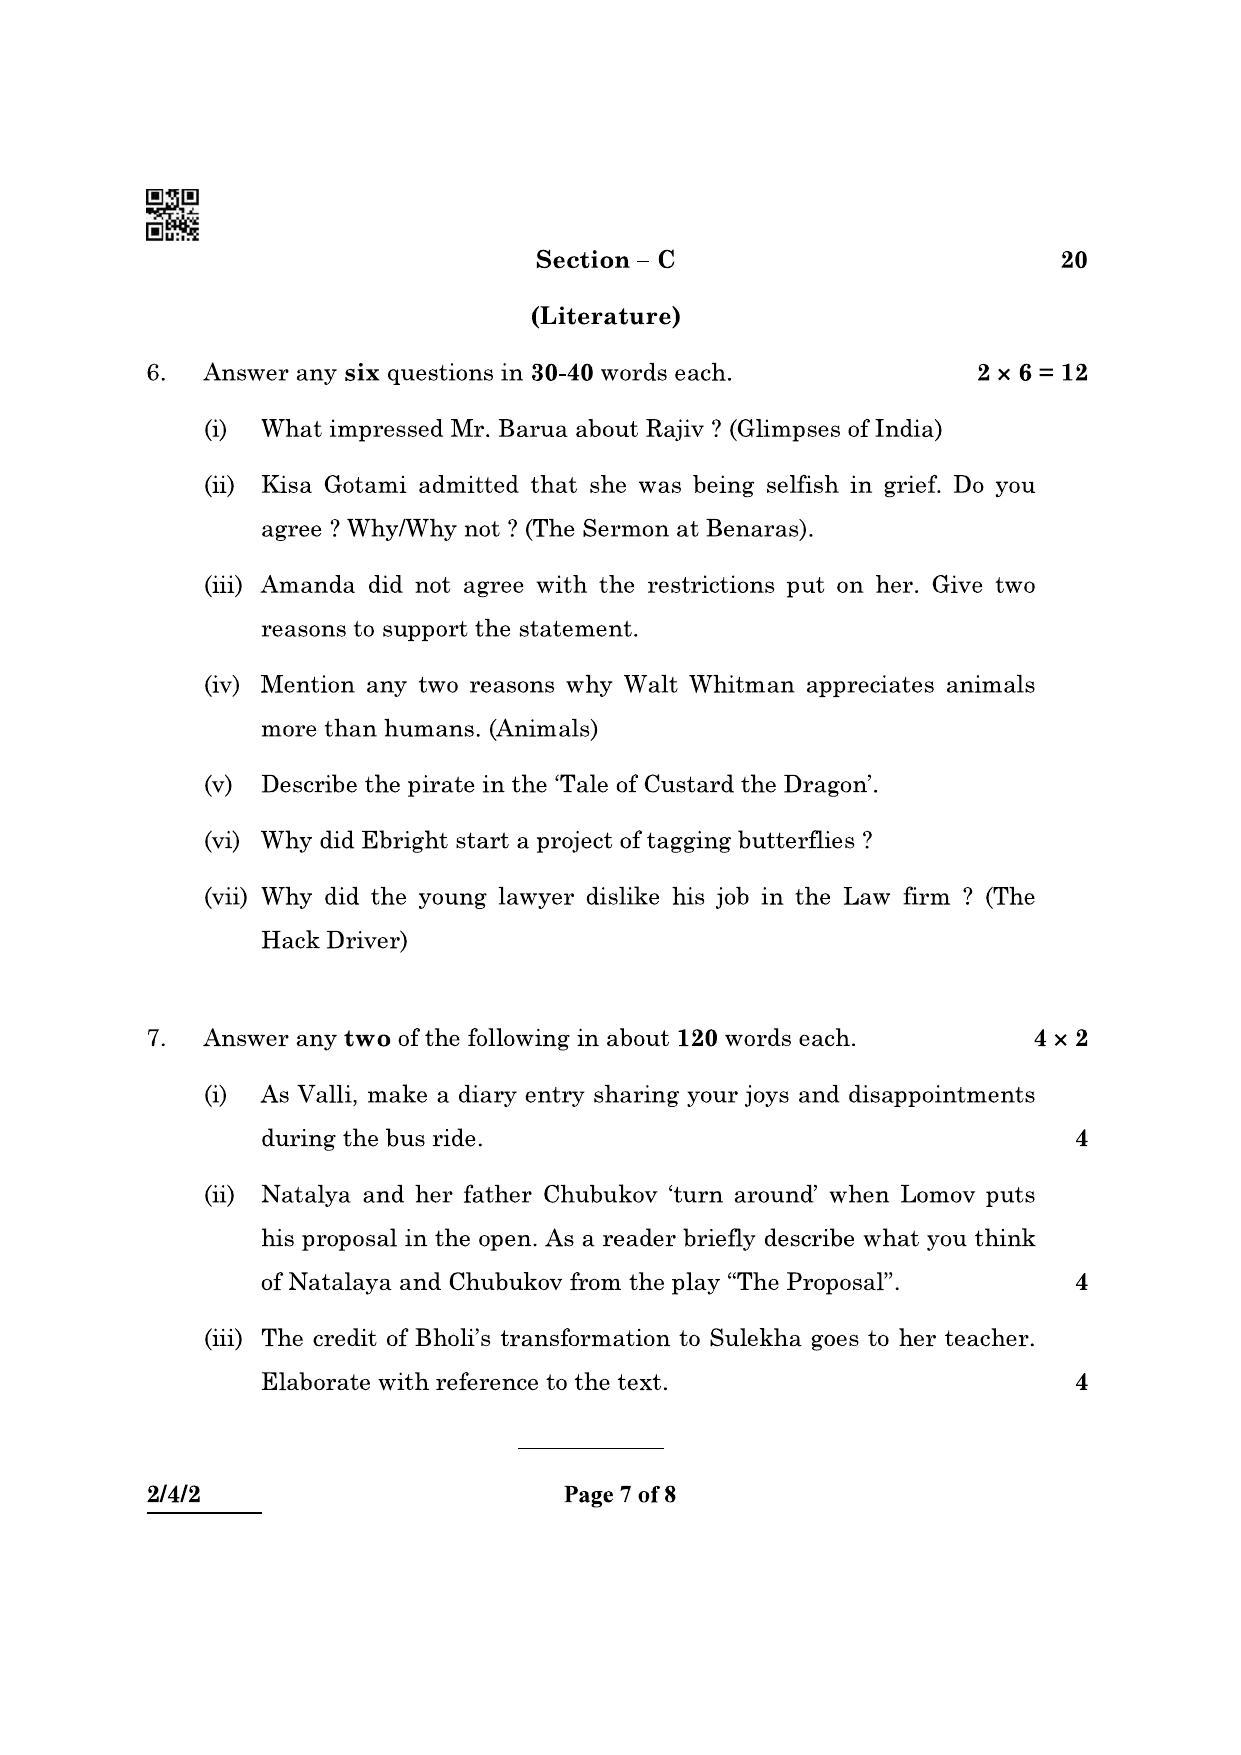 CBSE Class 10 2-4-2 (English L & L) 2022 Question Paper - Page 7